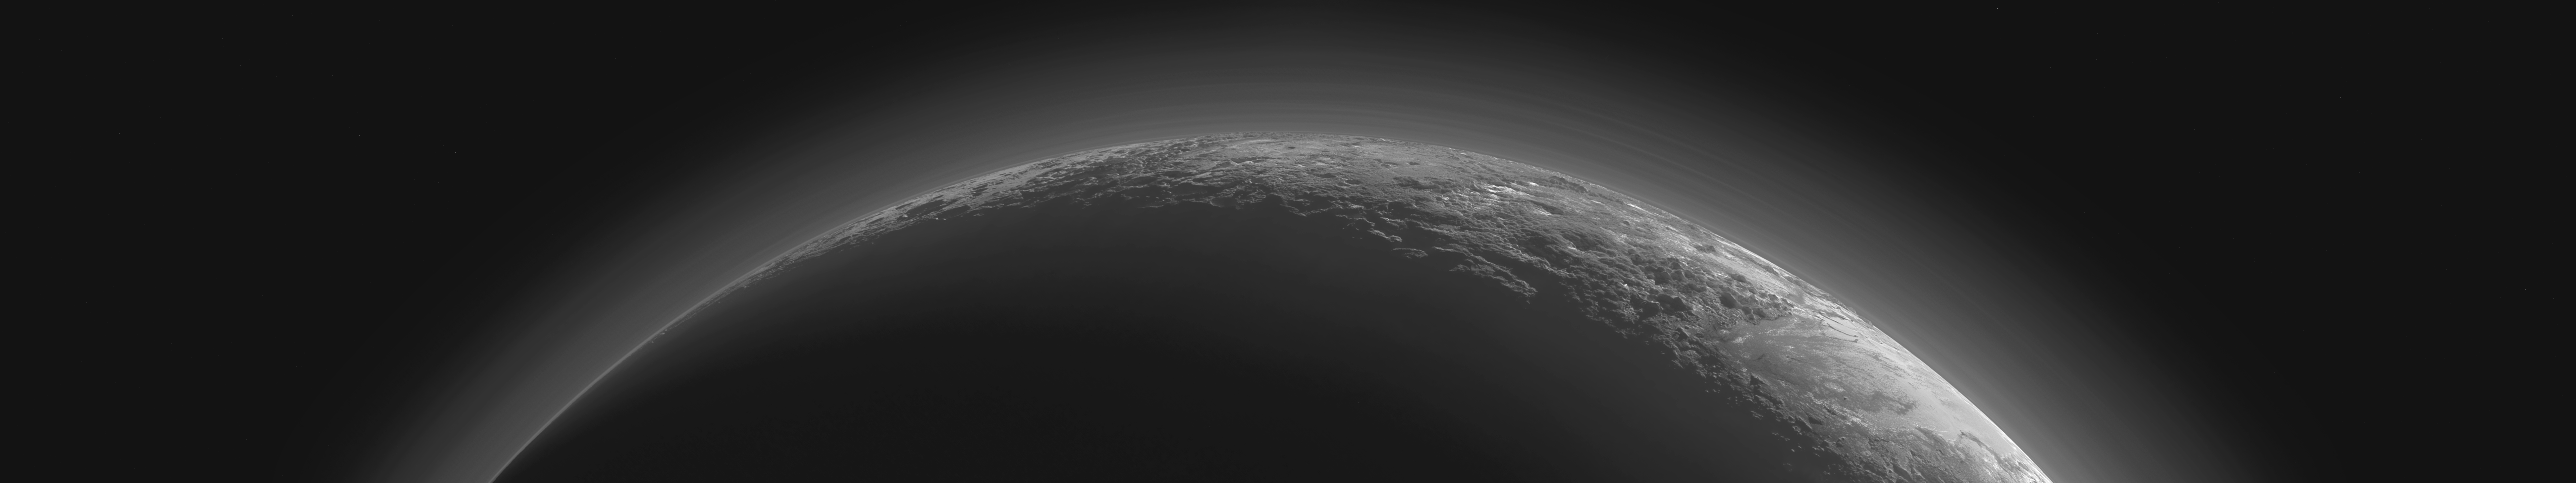 Earth & Pluto Wallpaper [7680x1440]